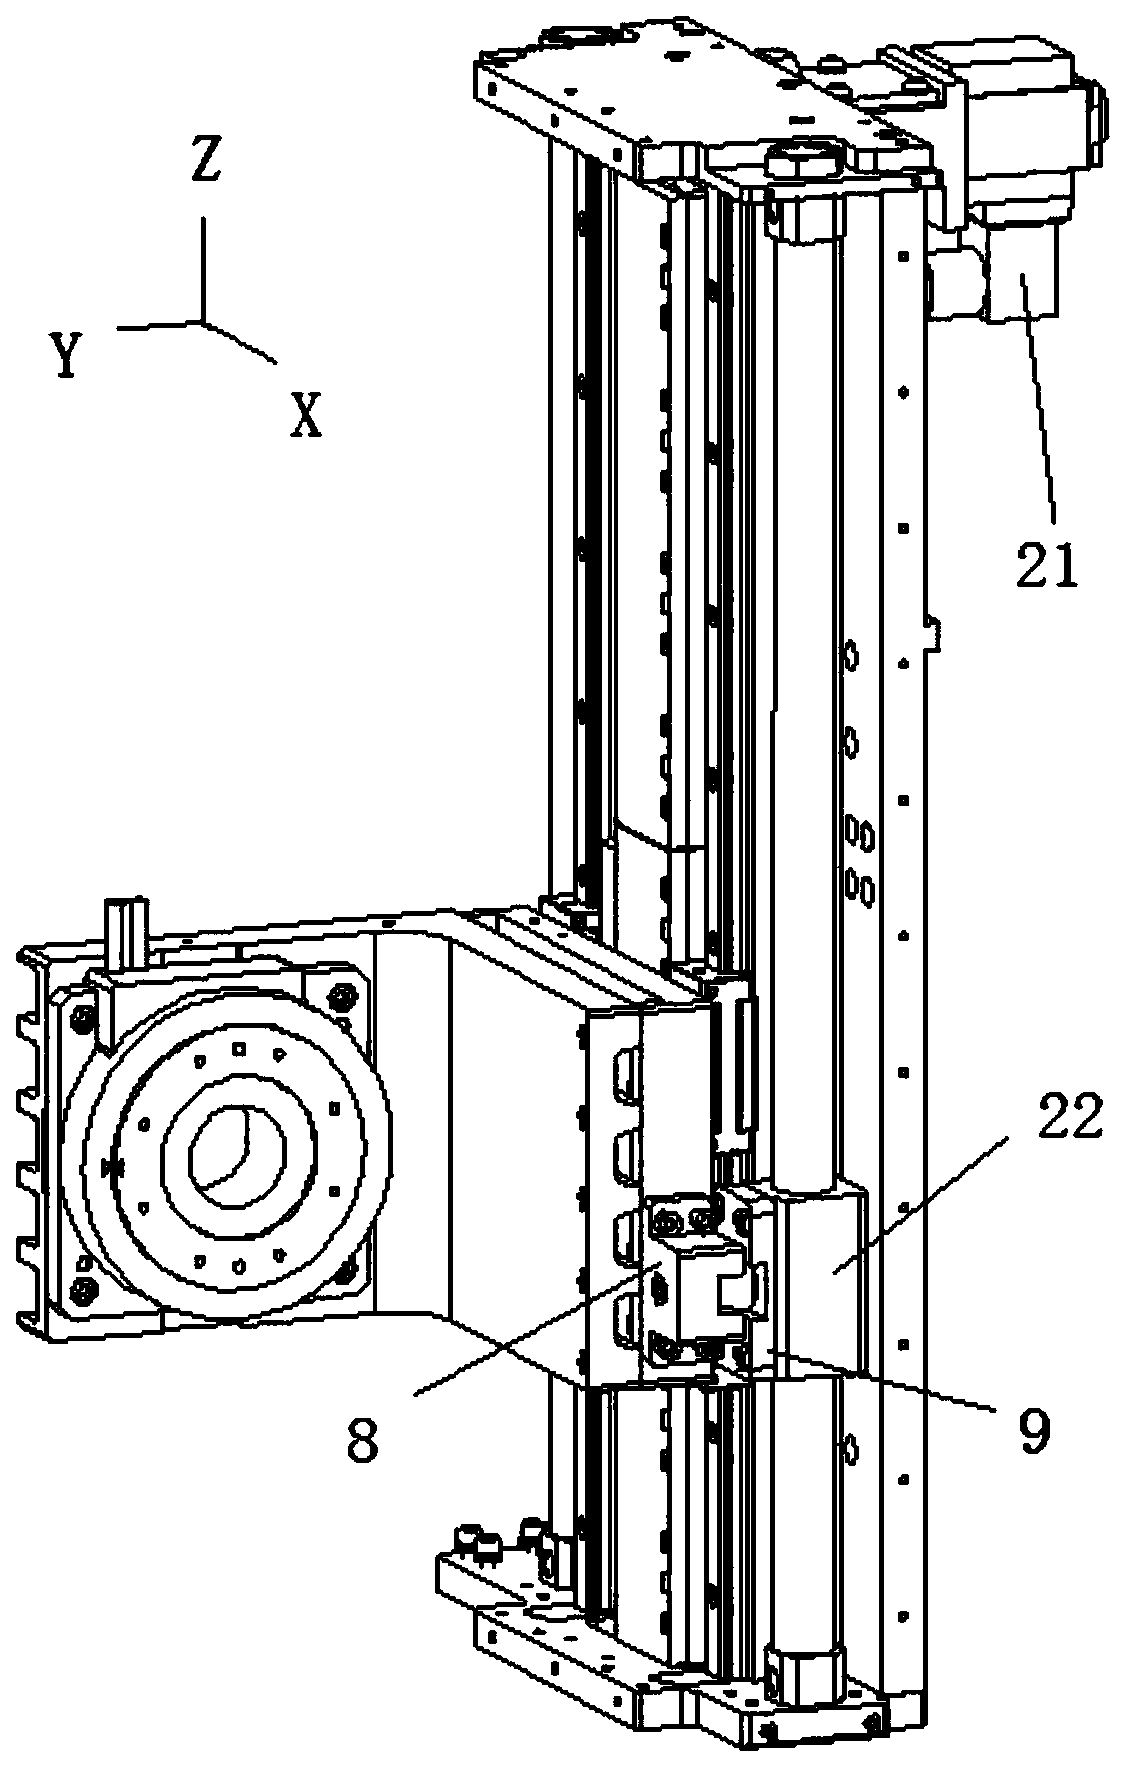 An anti-jamming z-axis balance device